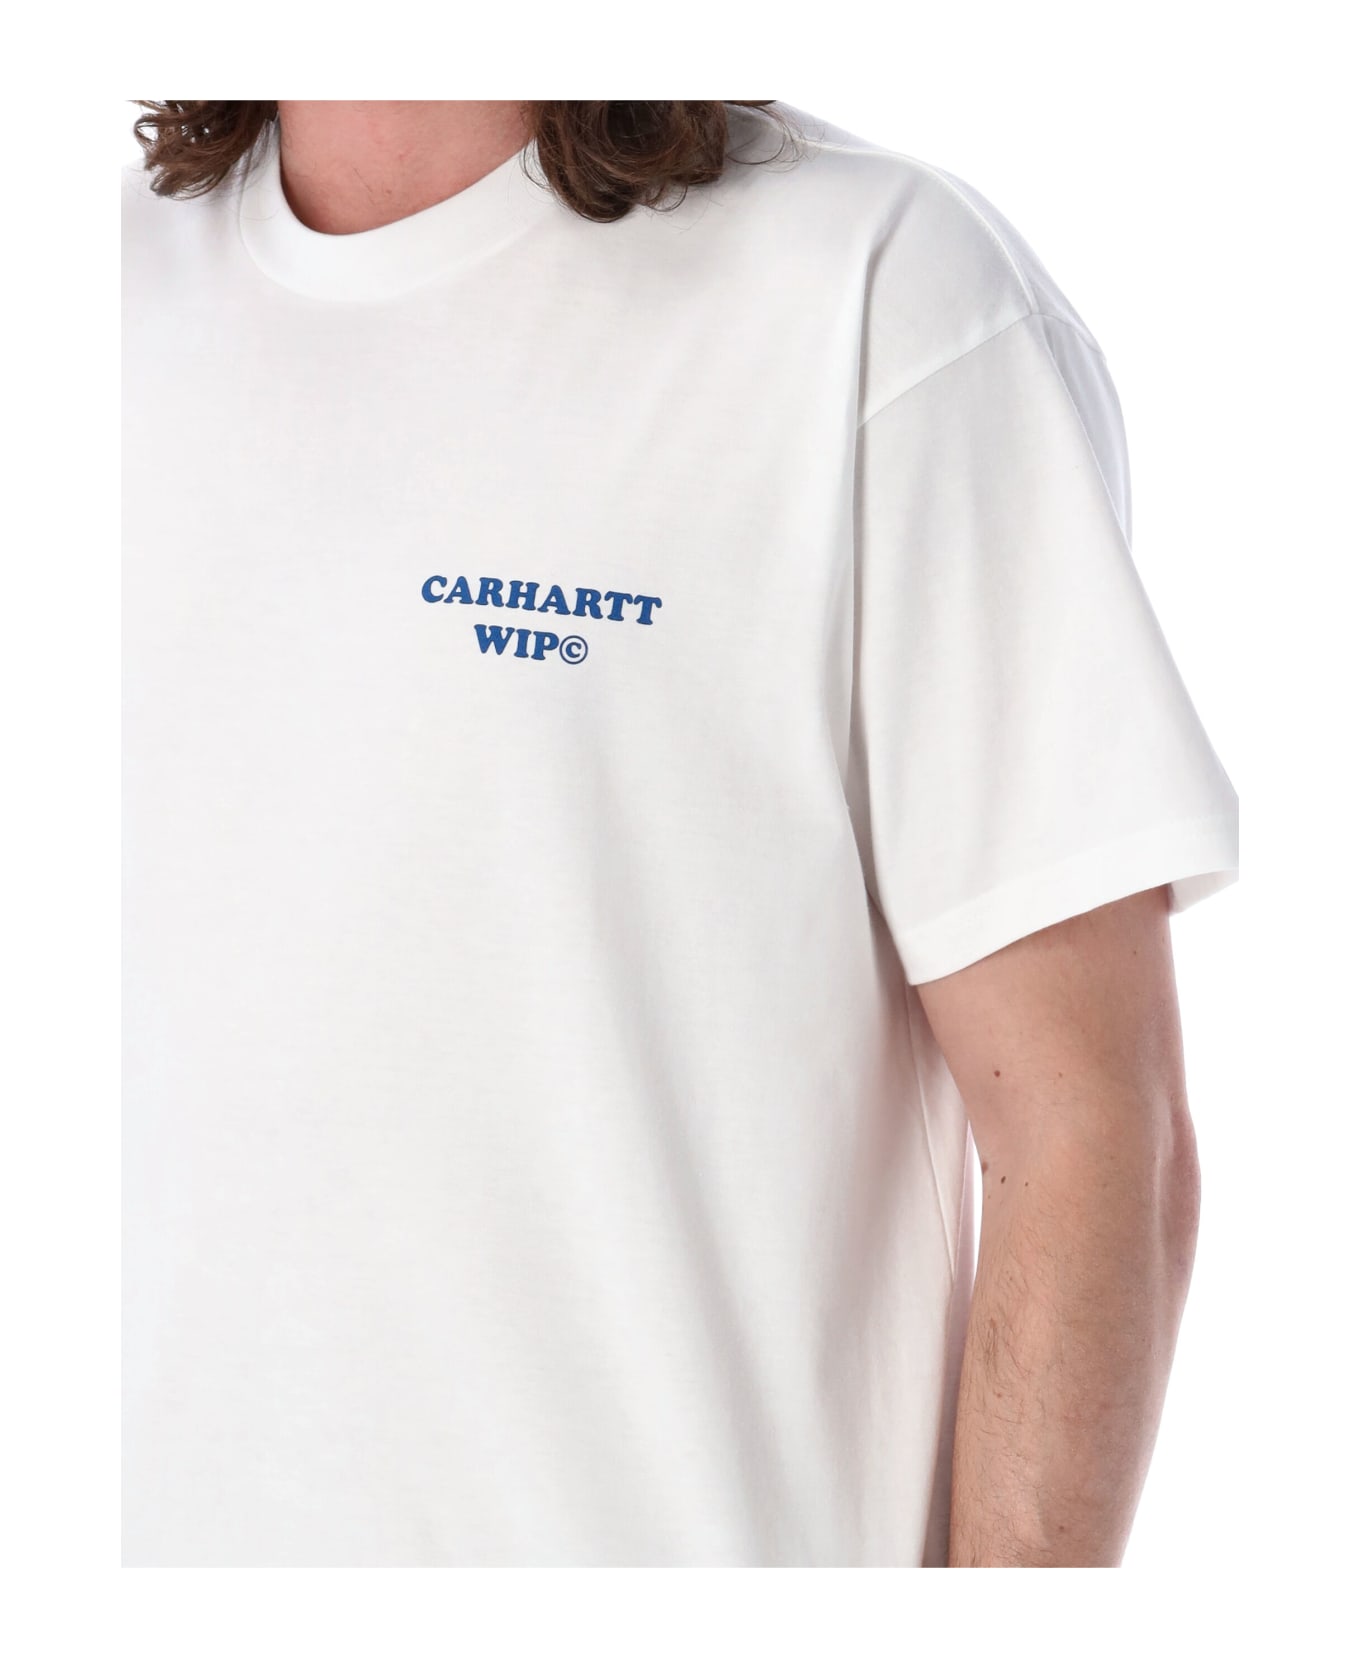 Carhartt Isis Maria Dinner T-shirt - WHITE